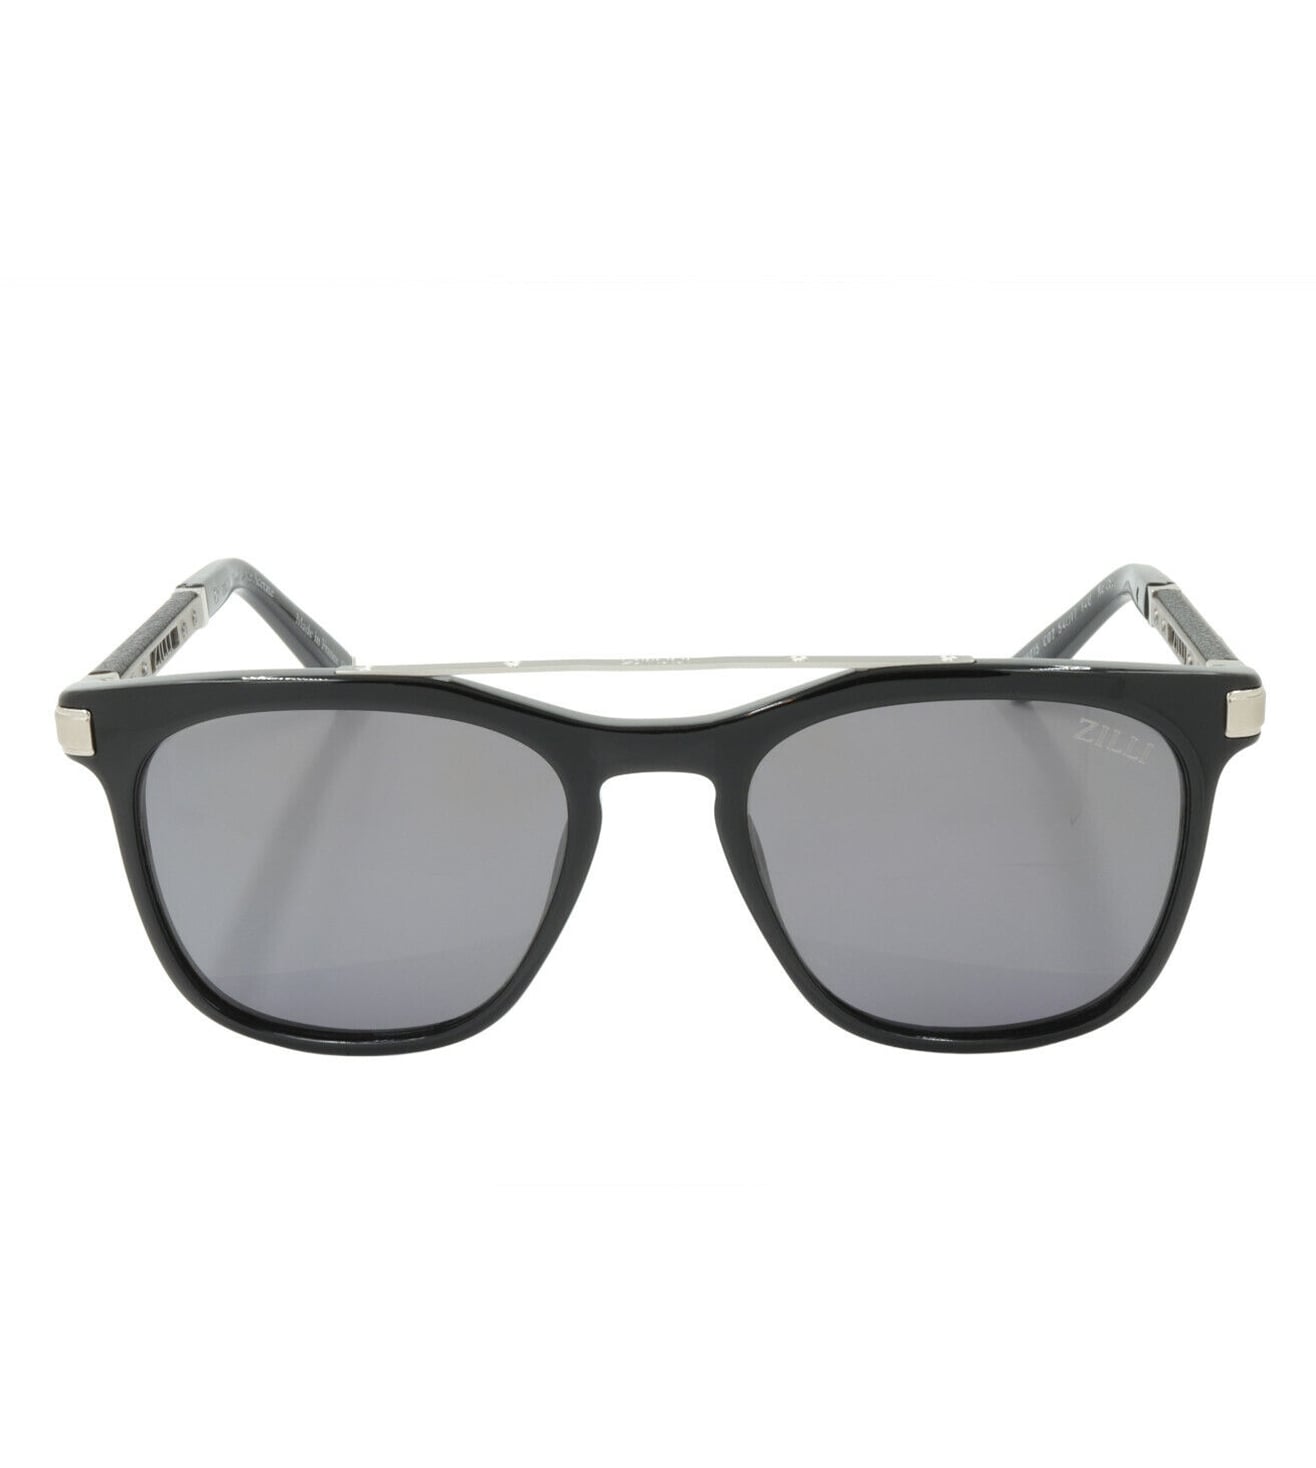 Zilli Black Rectangular Sunglasses